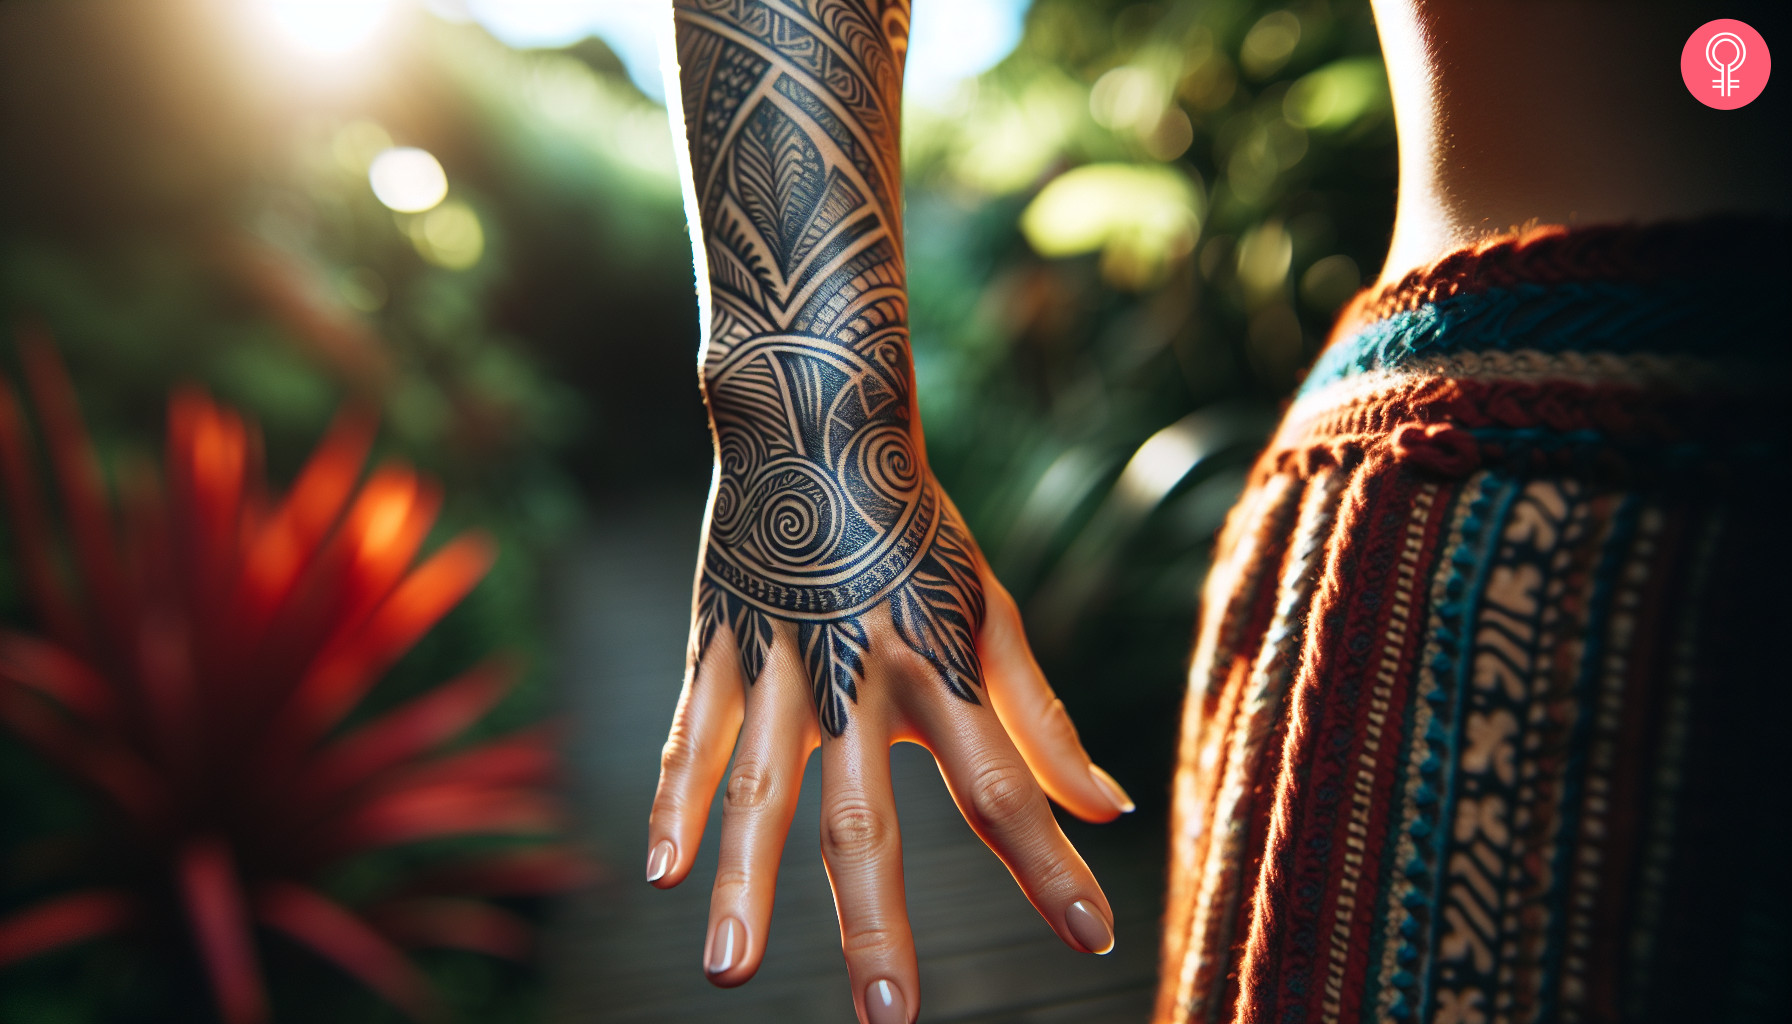 Polynesian maori tattoo on the hand of a woman